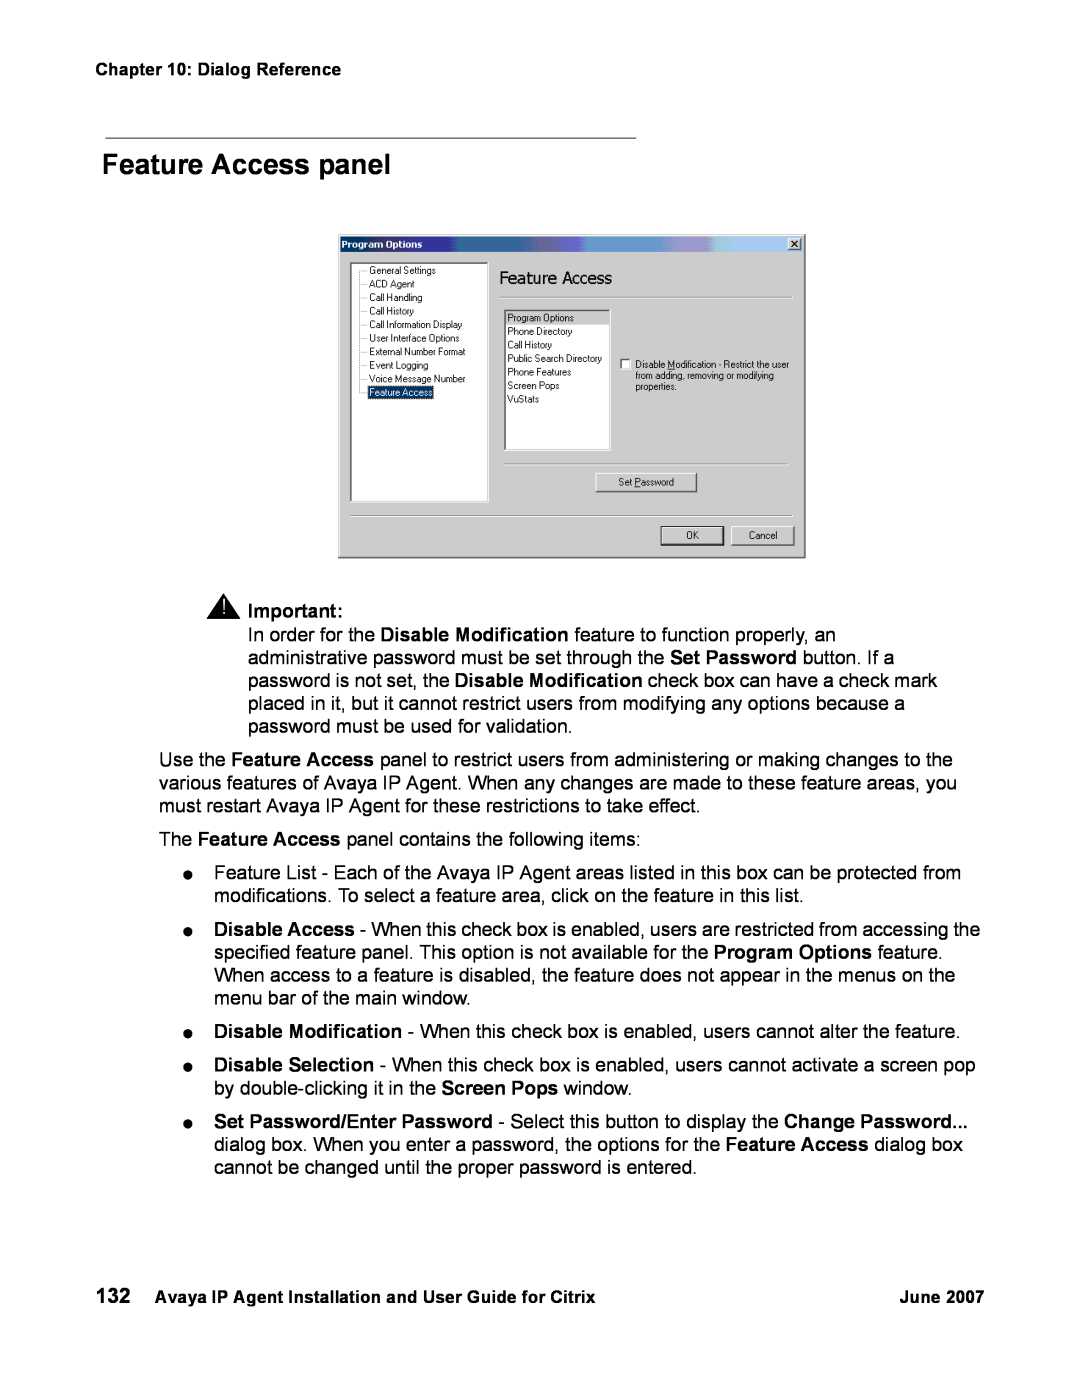 Avaya 7 manual Feature Access panel 